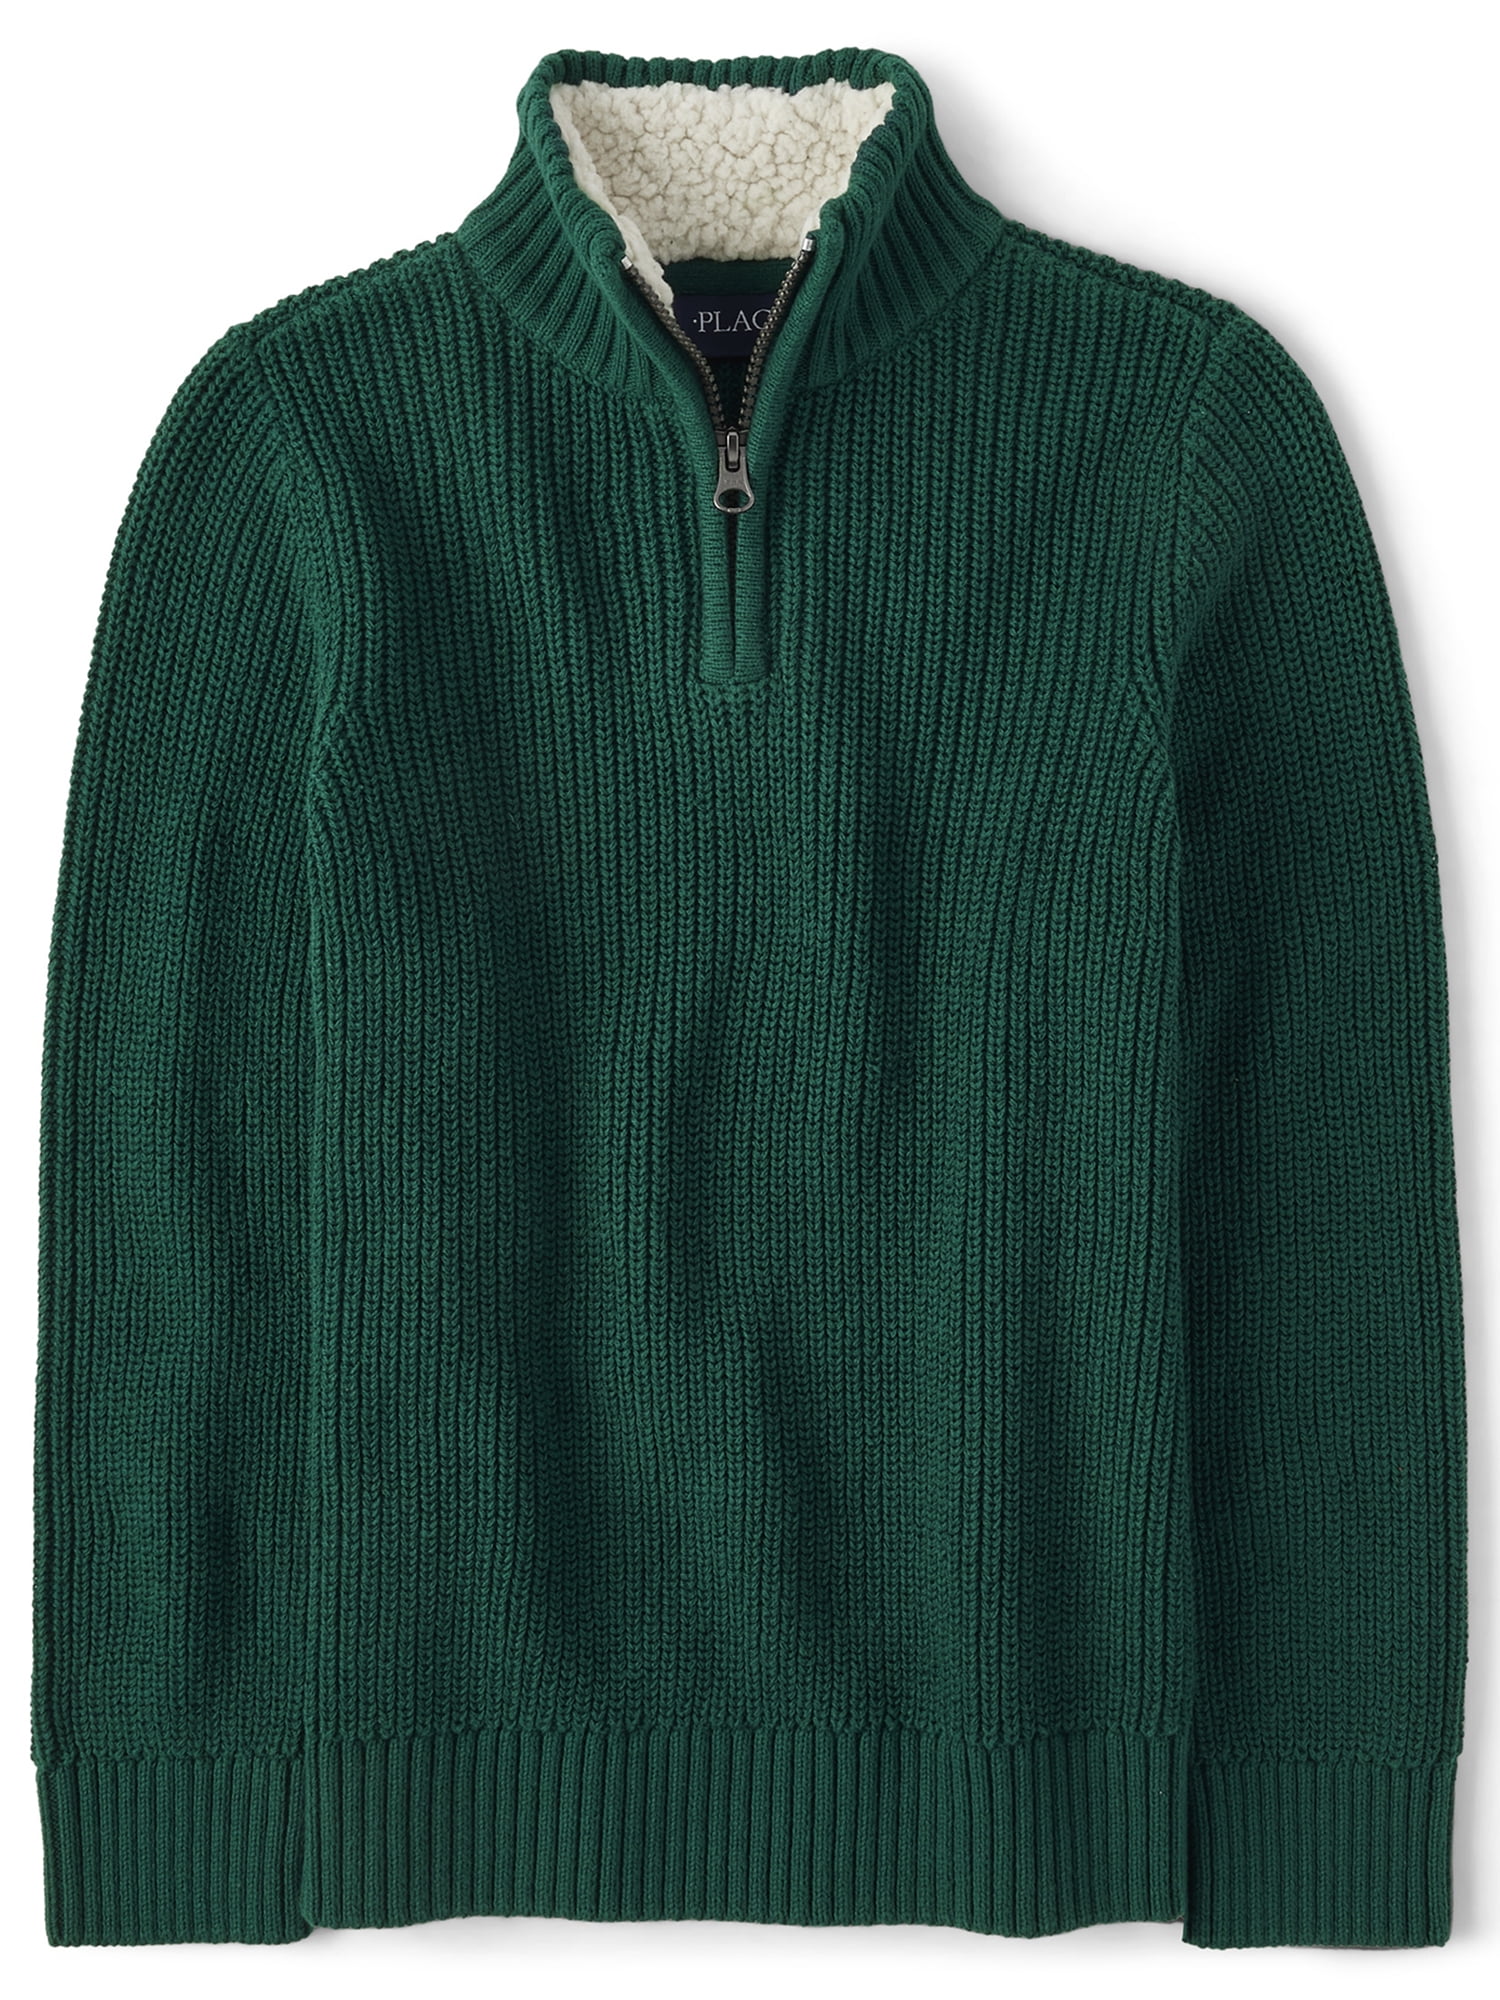 The Children's Place Boys Quarter Zip Sweater, Sizes XS-XXL - Walmart.com